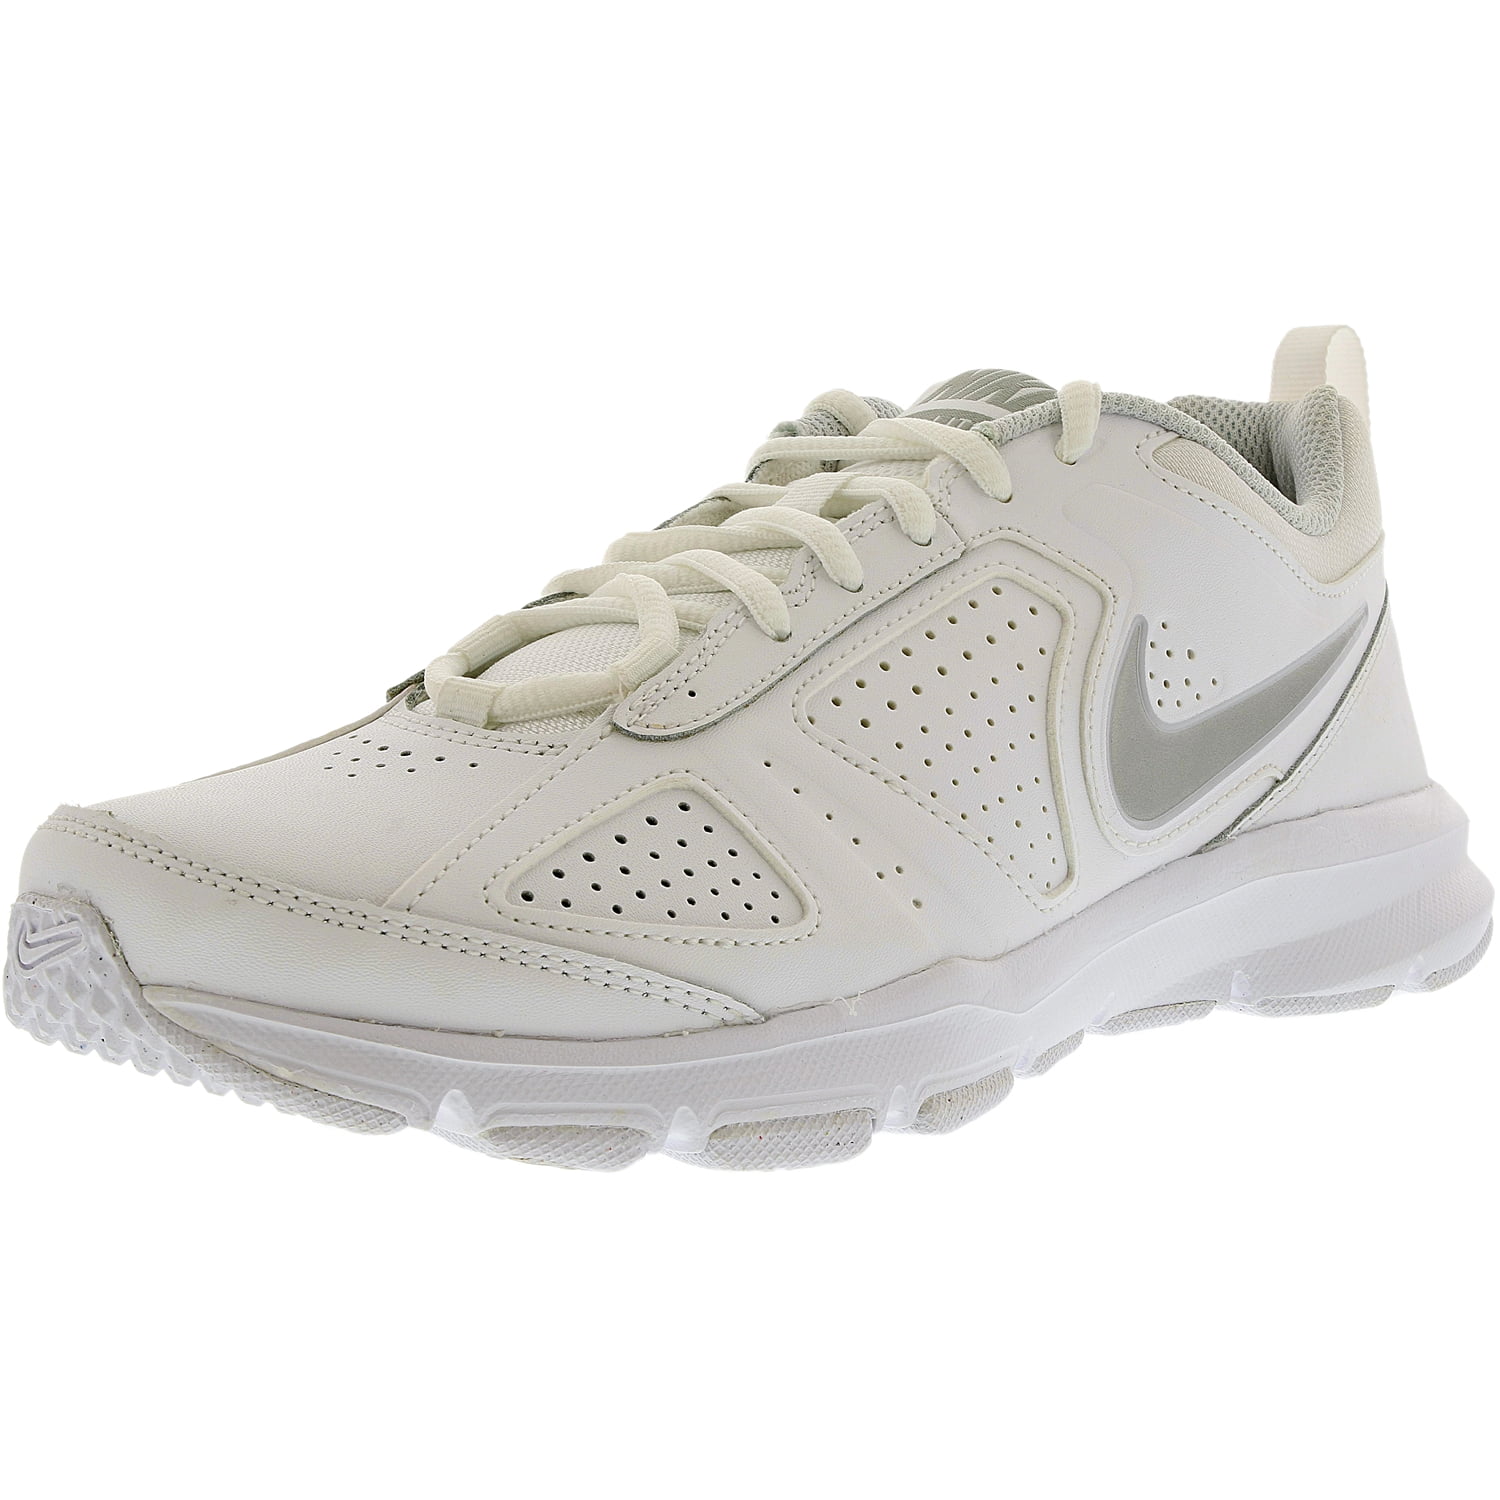 Nike Men's T-Lite White/Metallic Silver/Pure Ankle-High Shoe - 7.5M Walmart.com